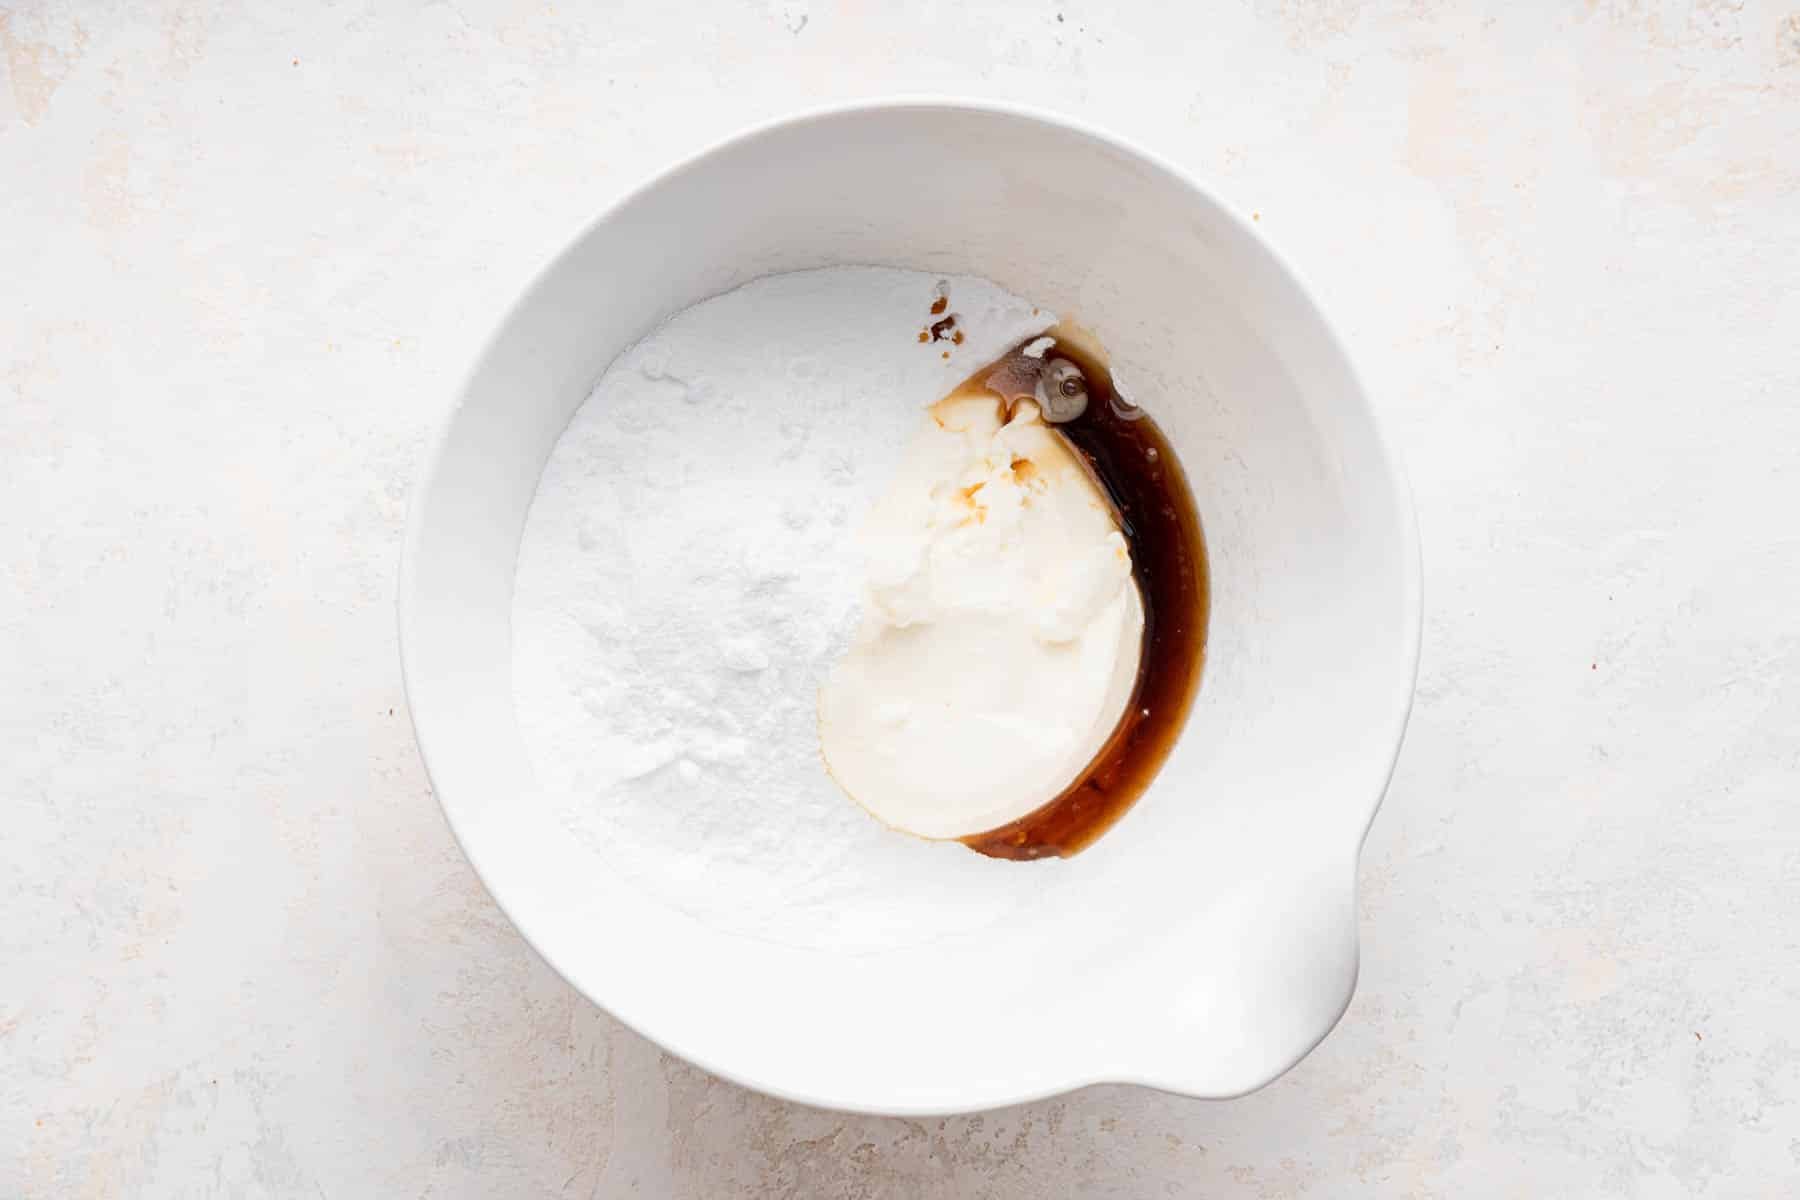 White bowl with sugar, mascarpone, and brown liquid.